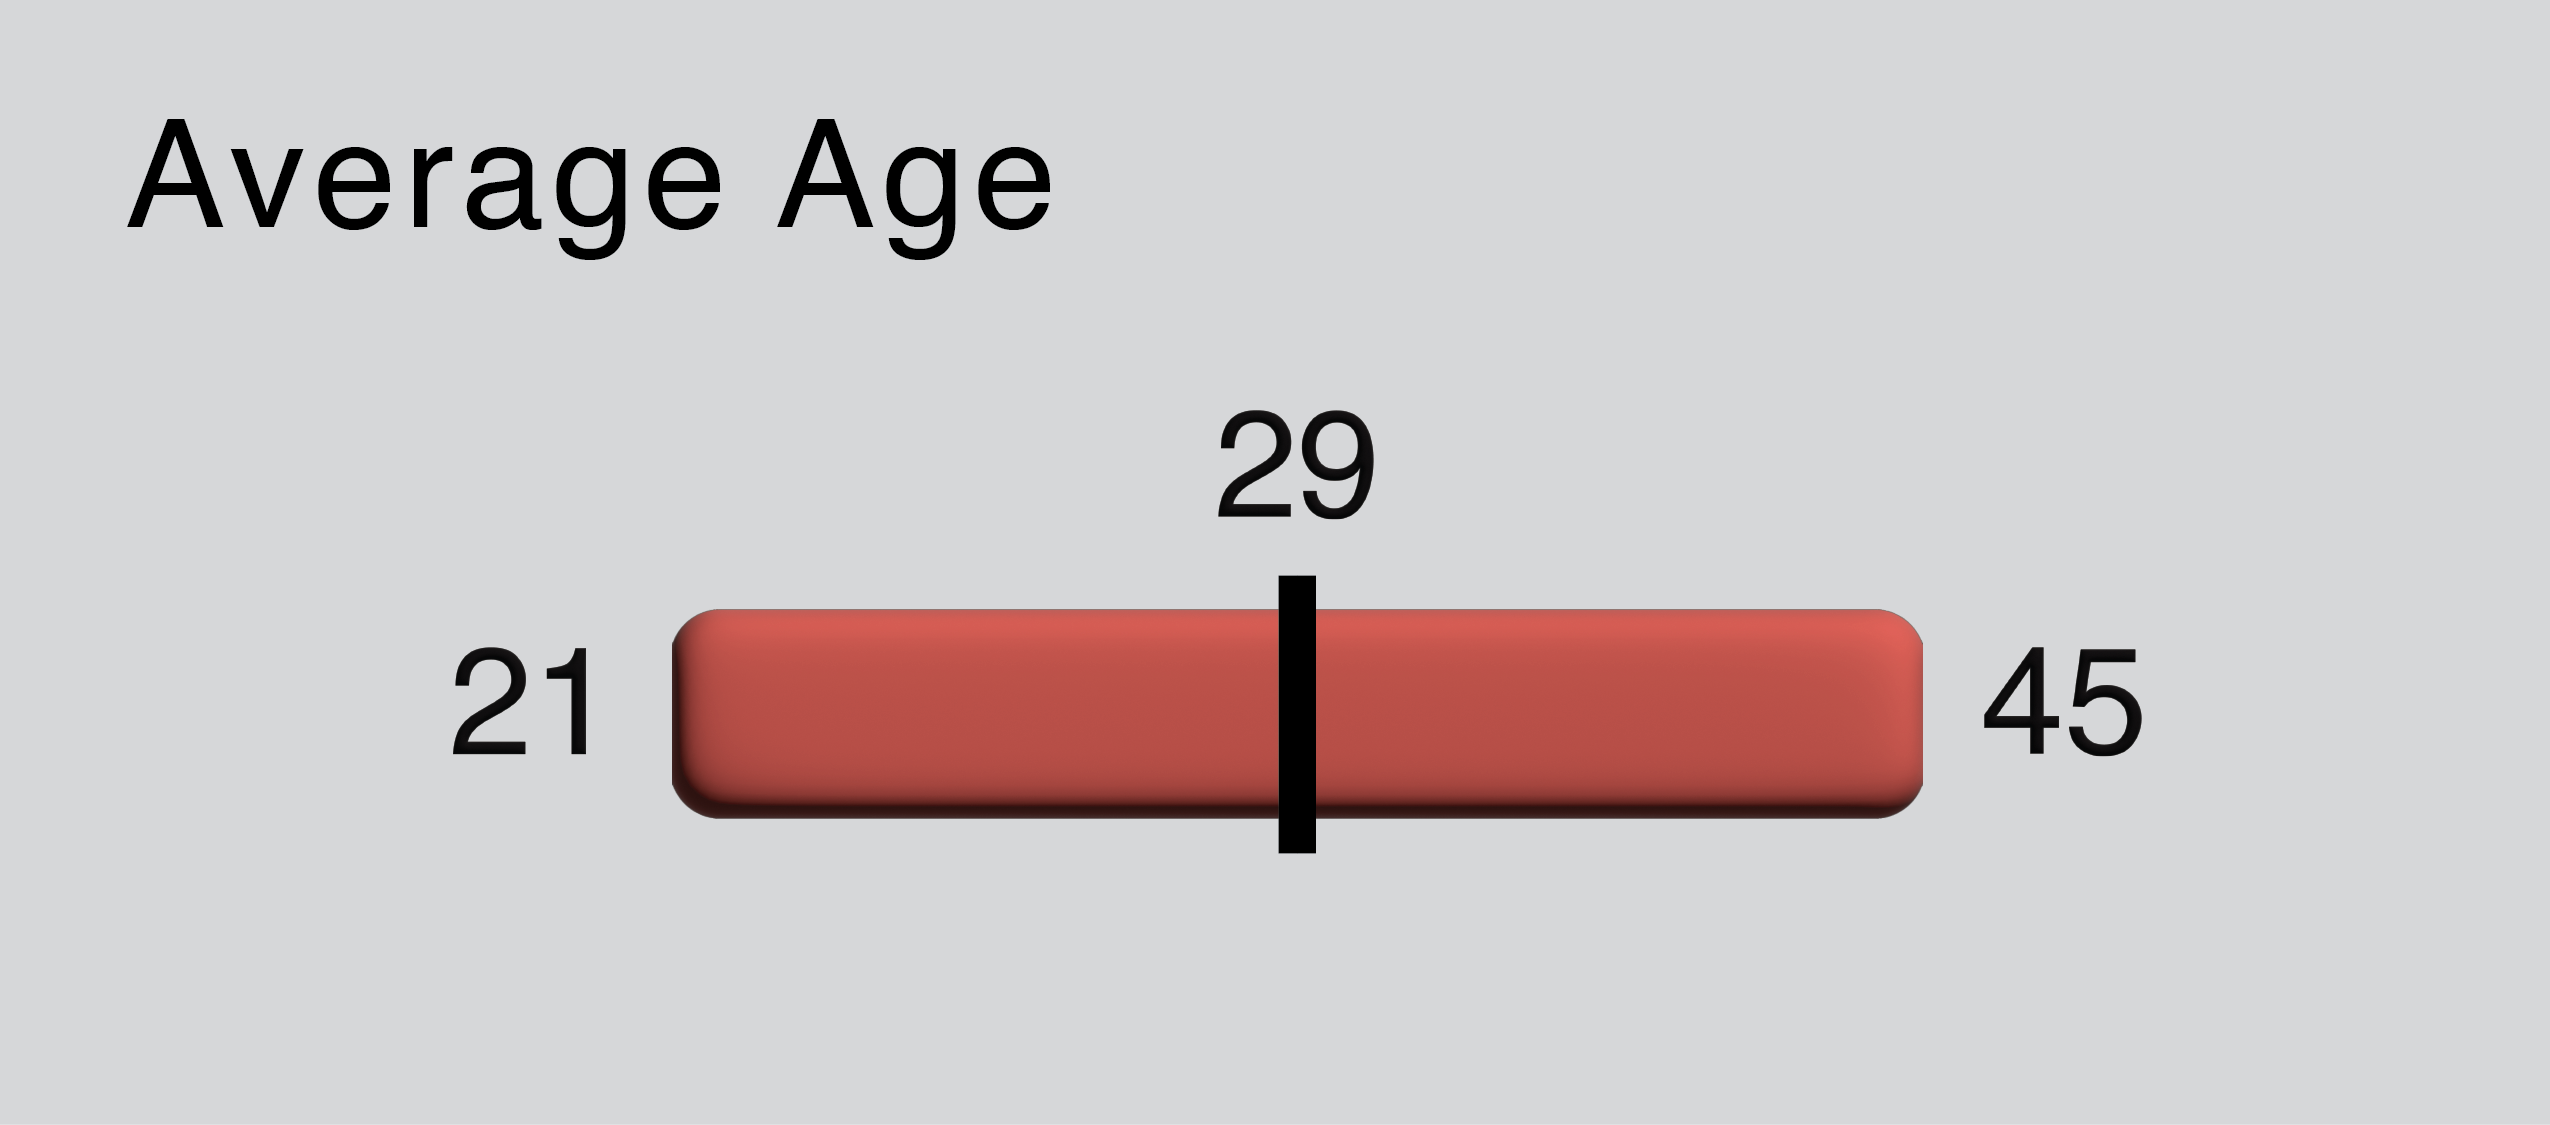 Average Age of Students